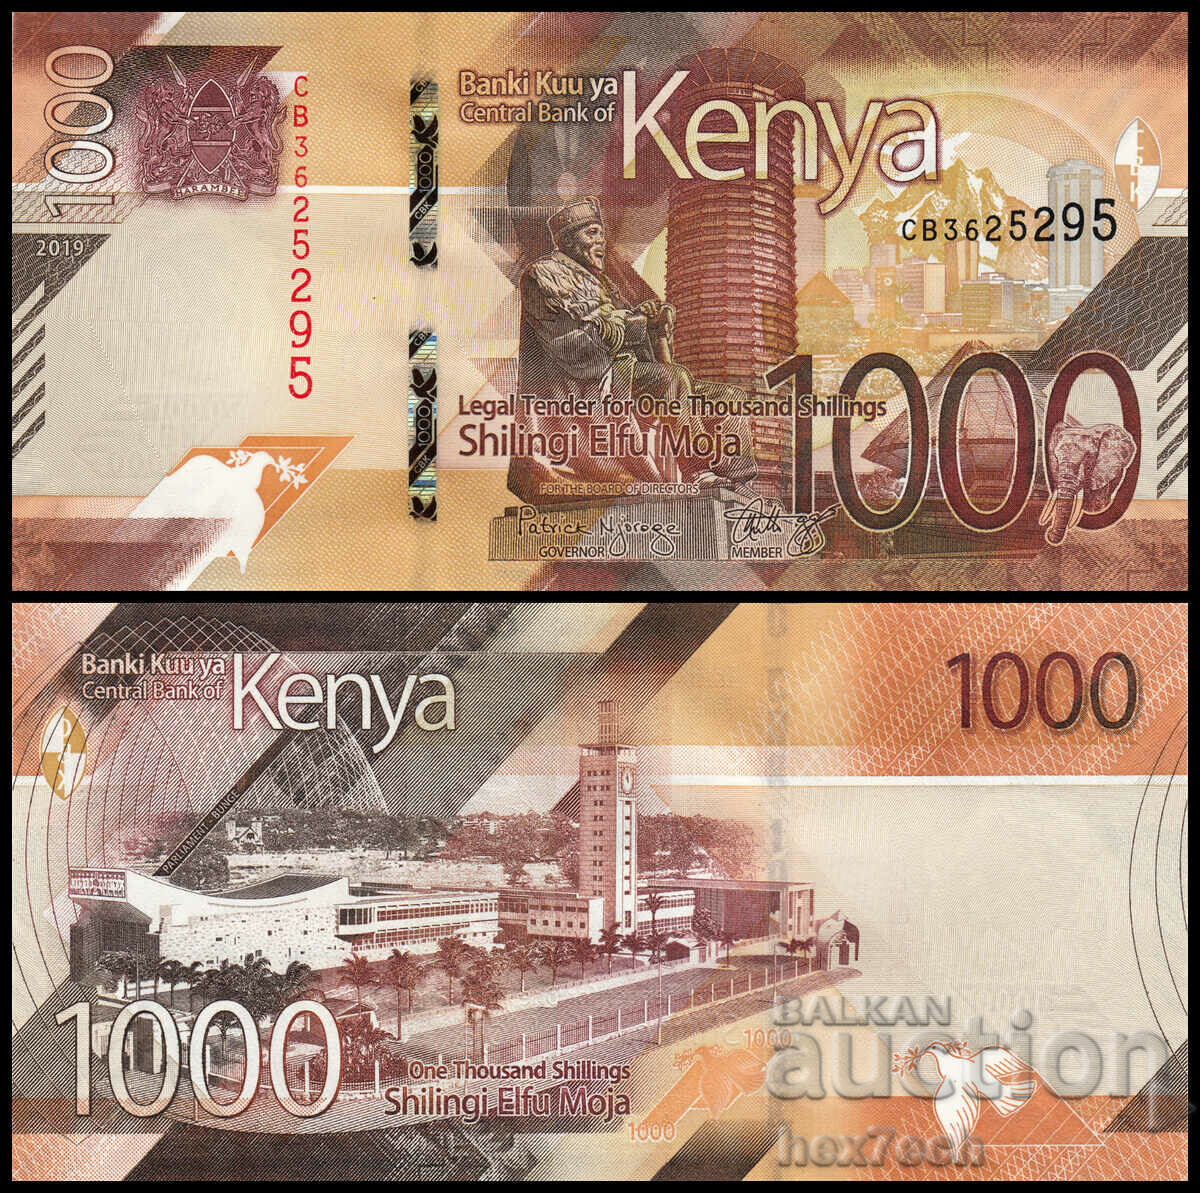 ❤️ ⭐ Kenya 2019 1000 de șilingi UNC nou ⭐ ❤️